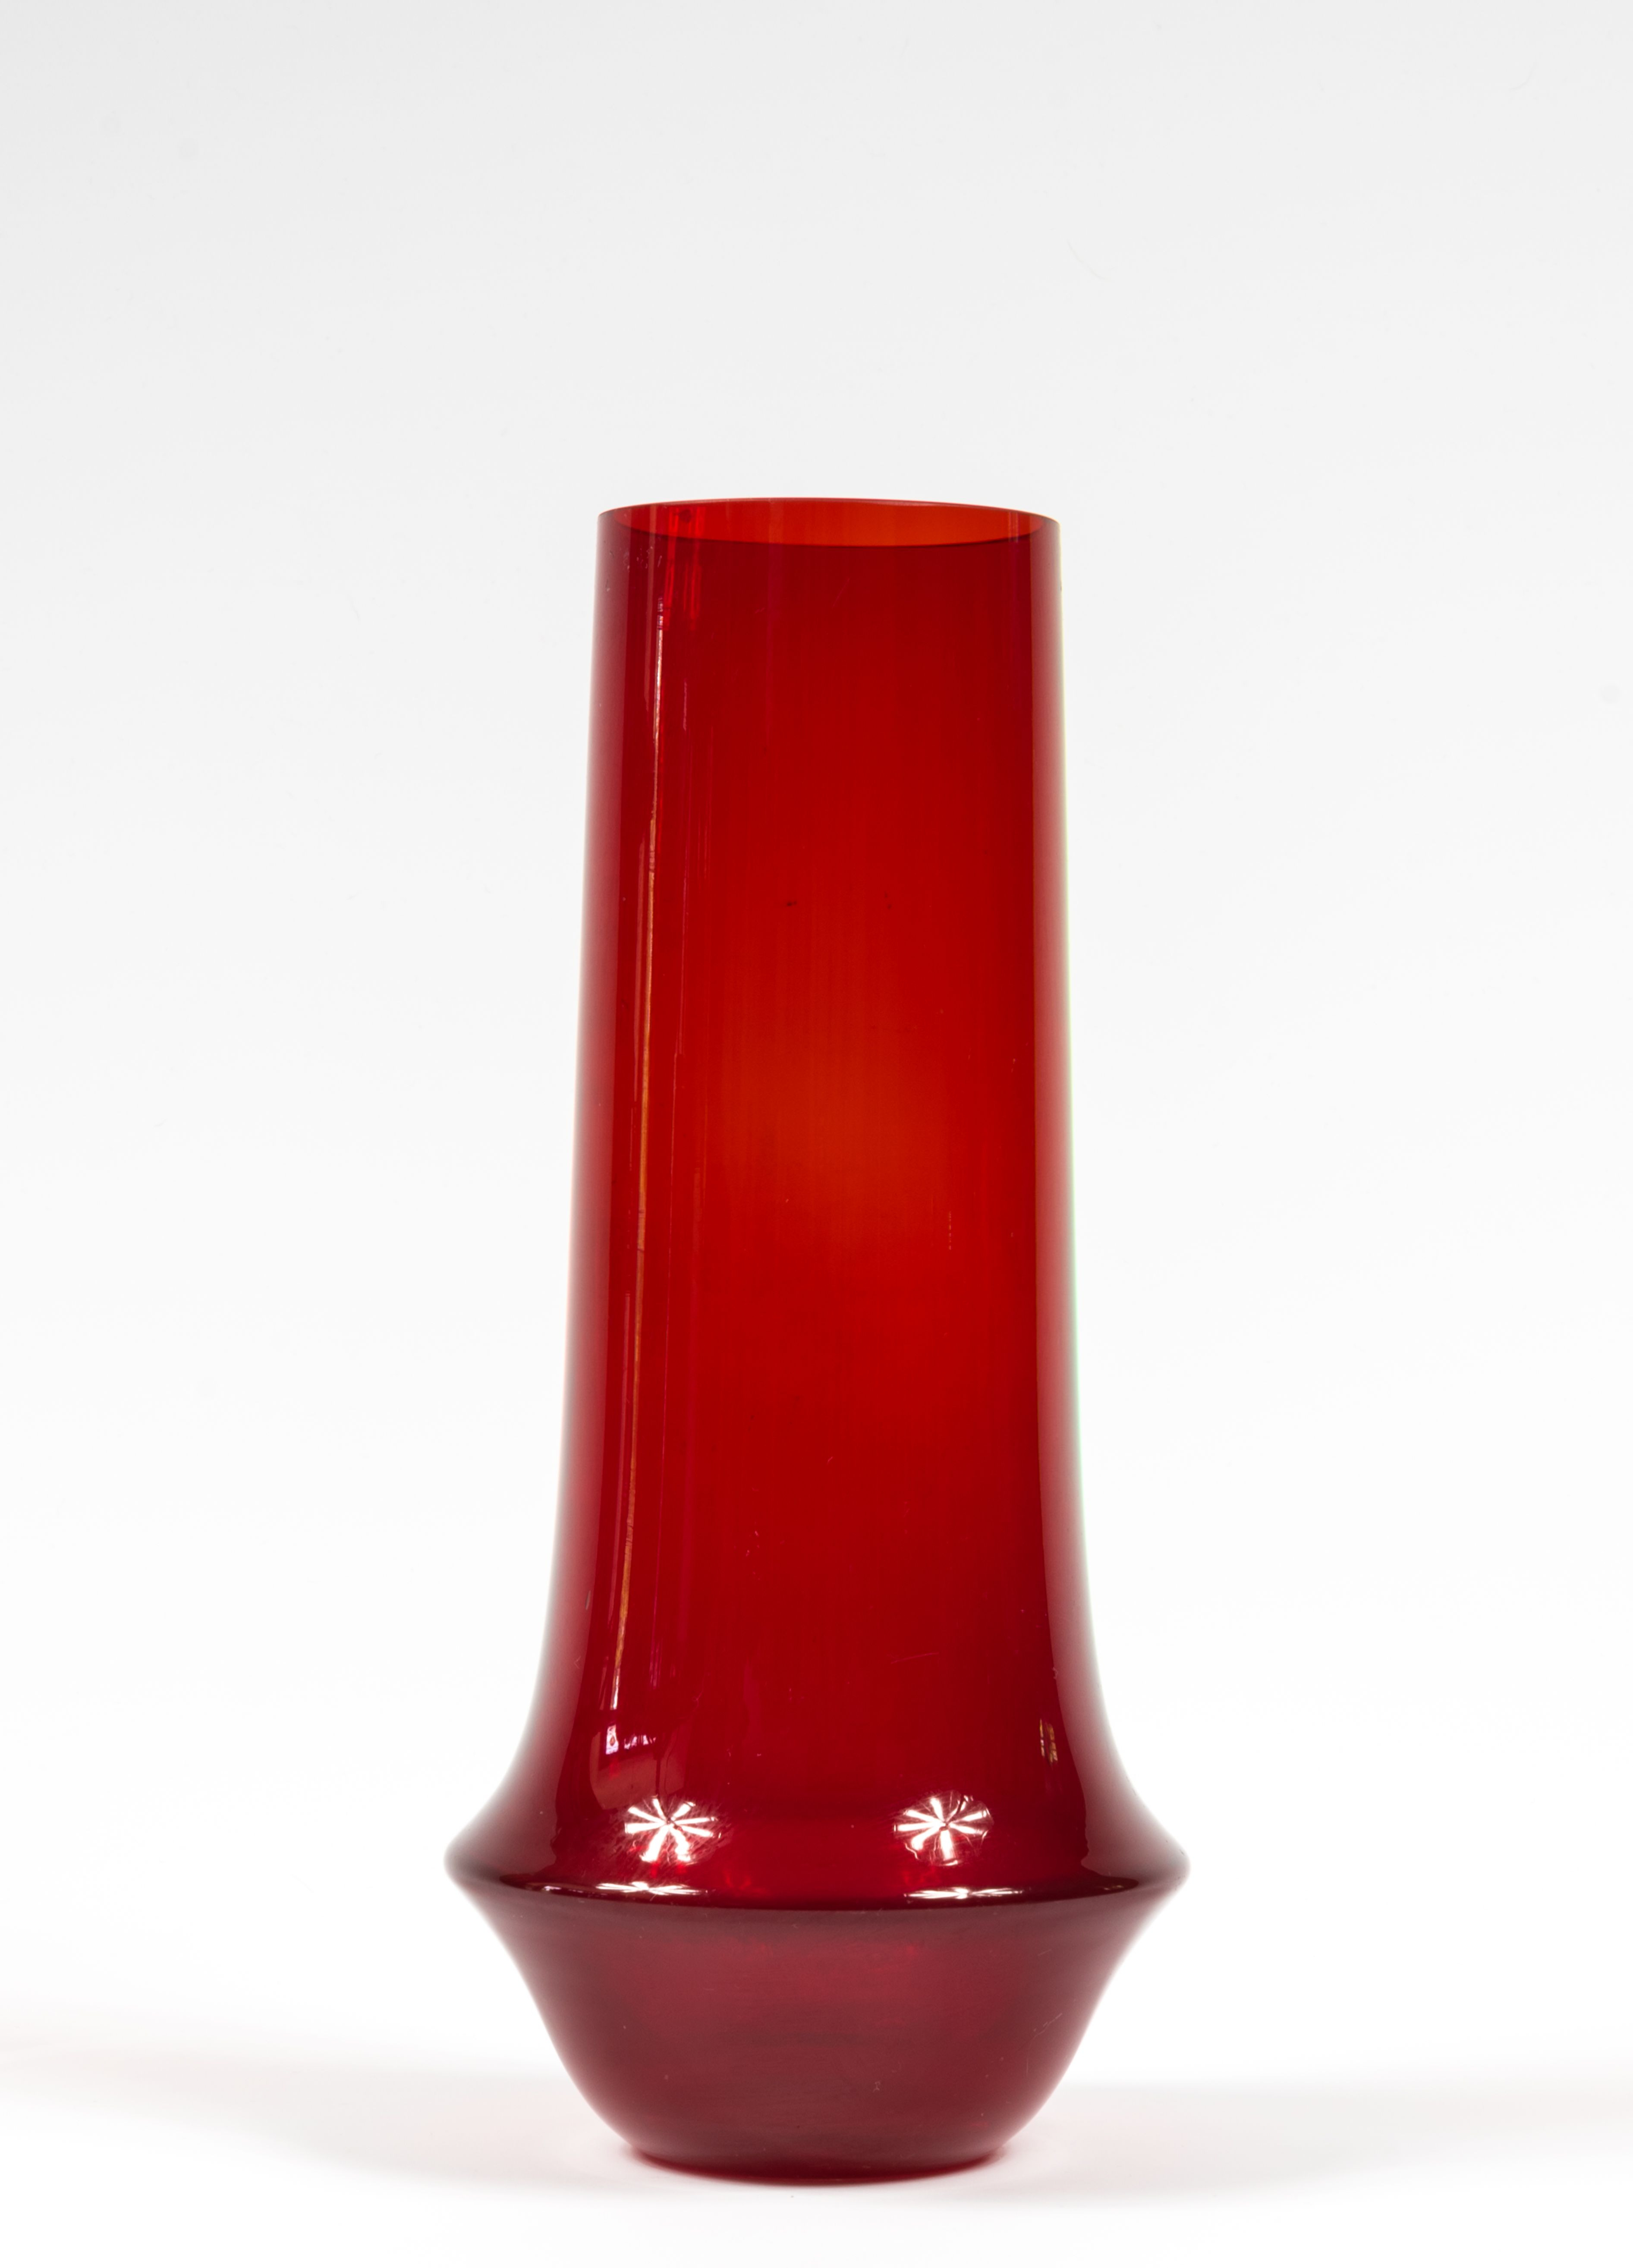 clear heart shaped vase of riihima¤en lasi oy riihimaki red glass vase by tamara aladin regarding large scandinavian red glass vase designed by tamara aladin c1963 for riihimaki riihimaen lasi oy